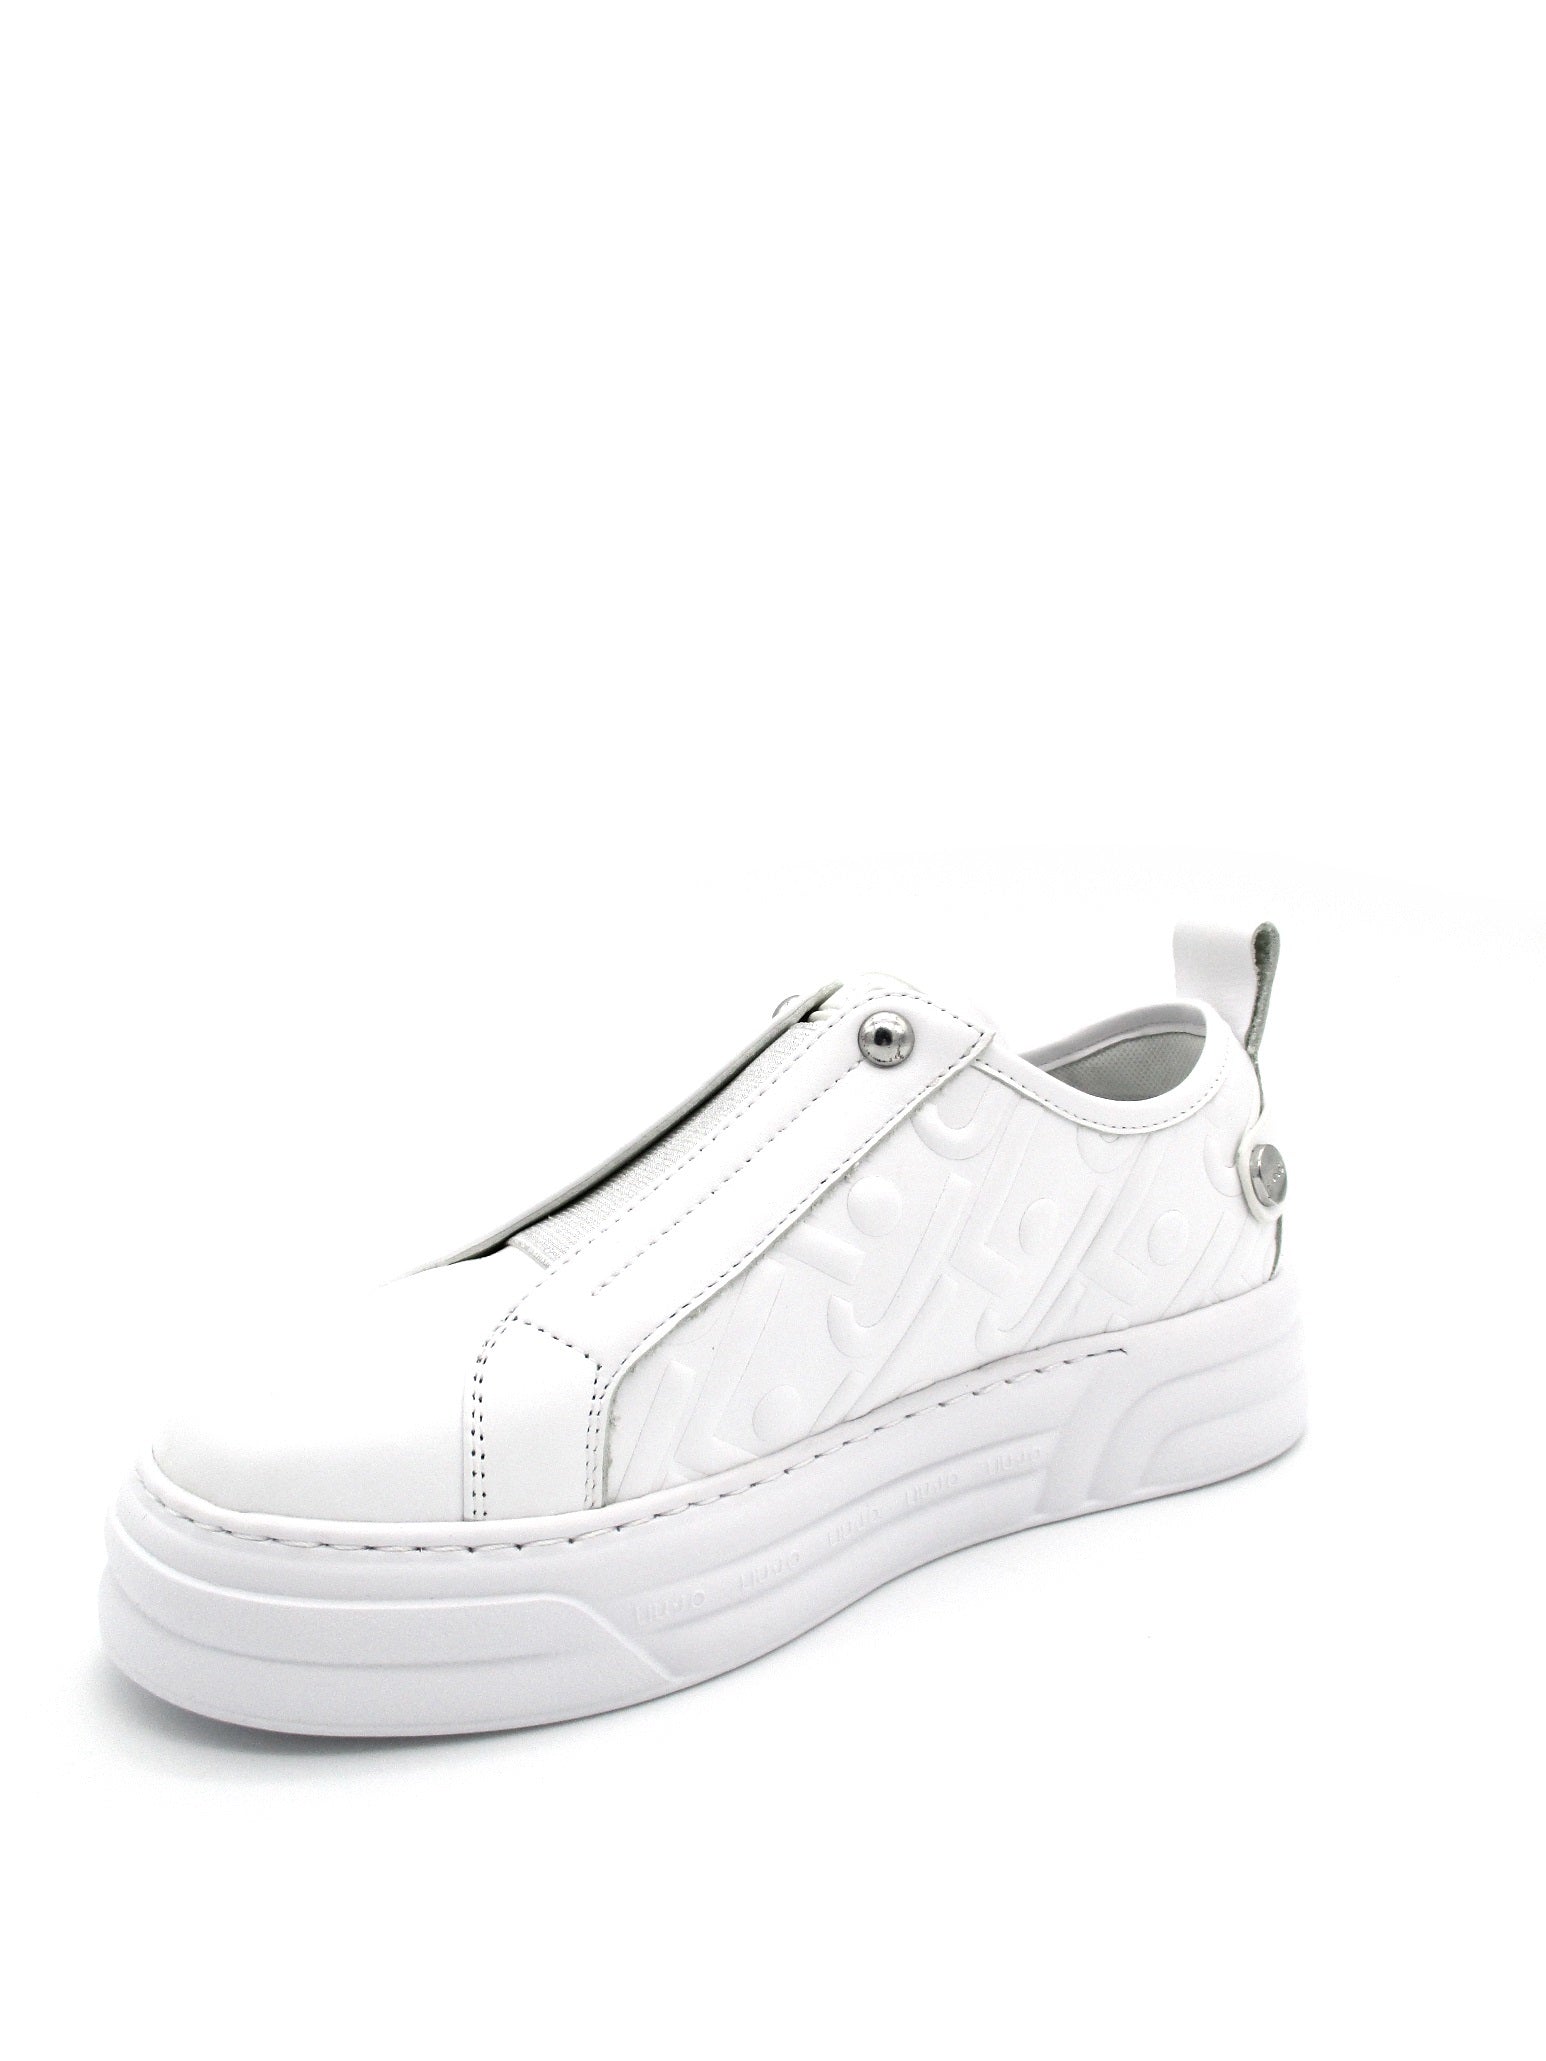 Sneaker LIU JO Cleo 02 White